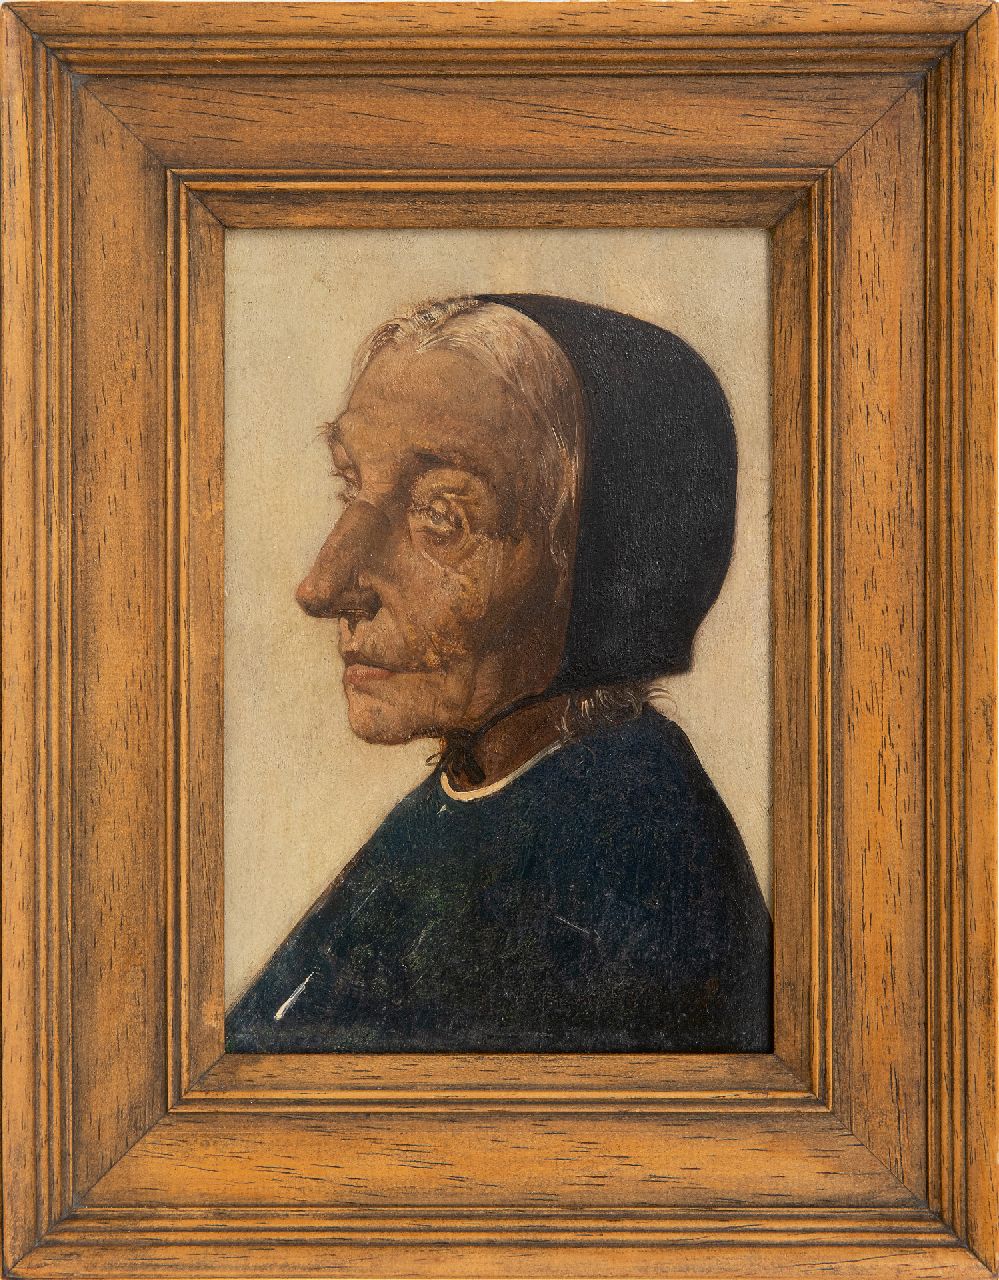 Berg W.H. van den | 'Willem' Hendrik van den Berg, A portrait of an elderly woman, Öl auf Holz 16,4 x 10,7 cm, signed l.r.